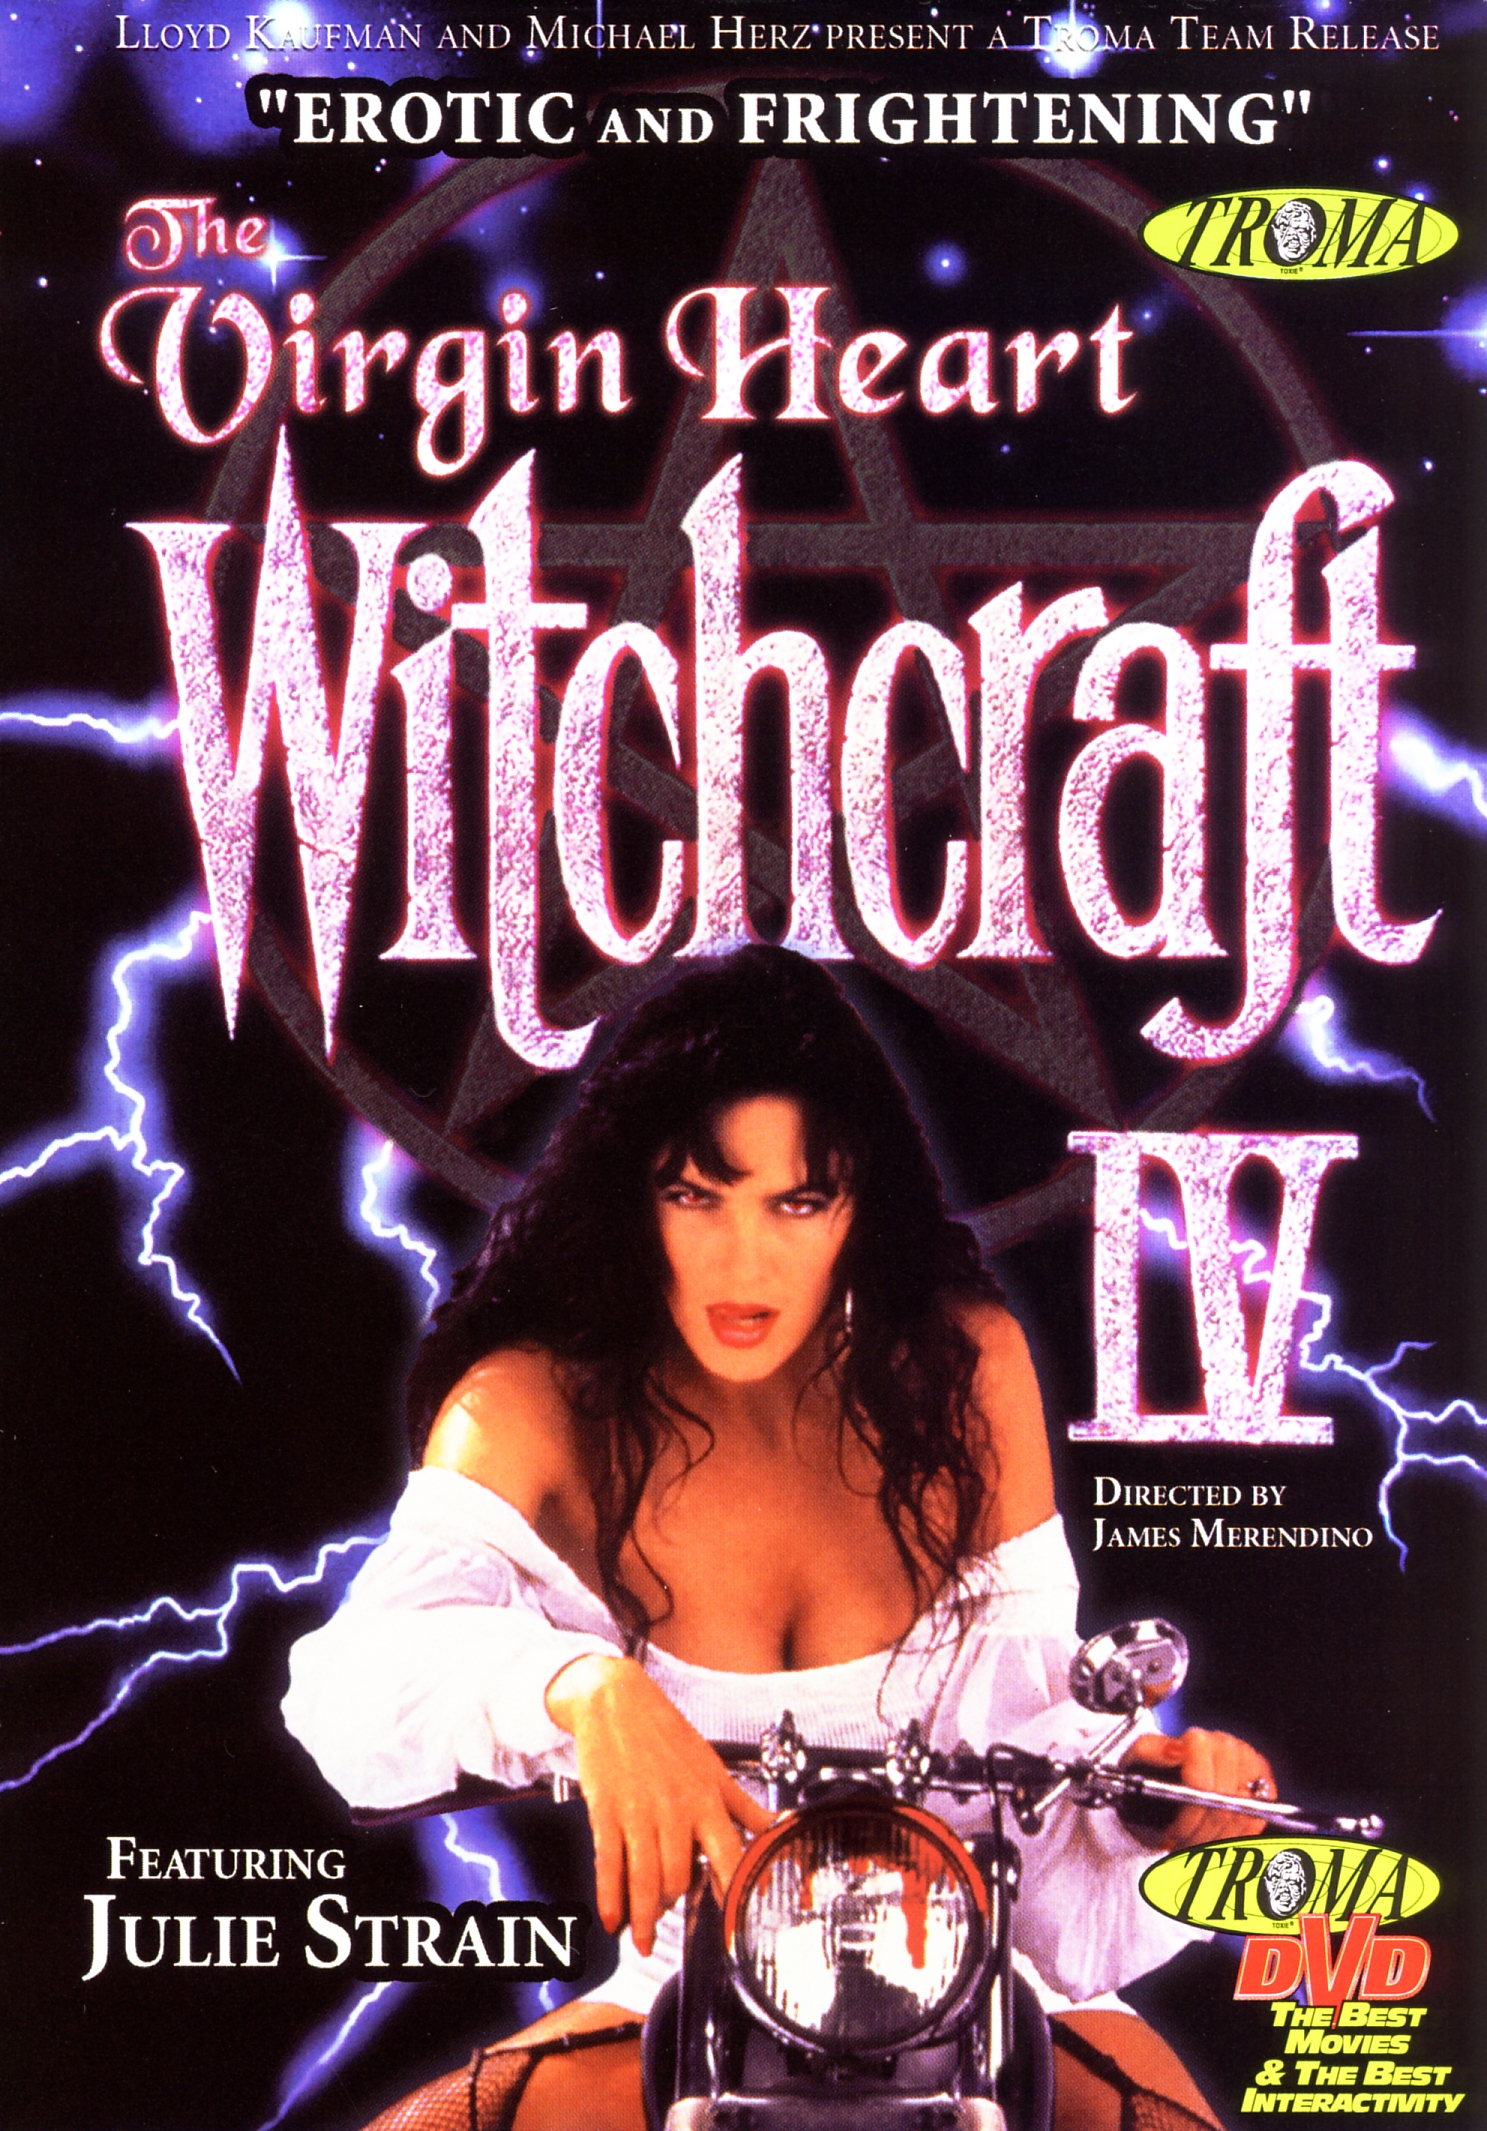 

Witchcraft 4: Virgin Heart [DVD] [English] [1992]